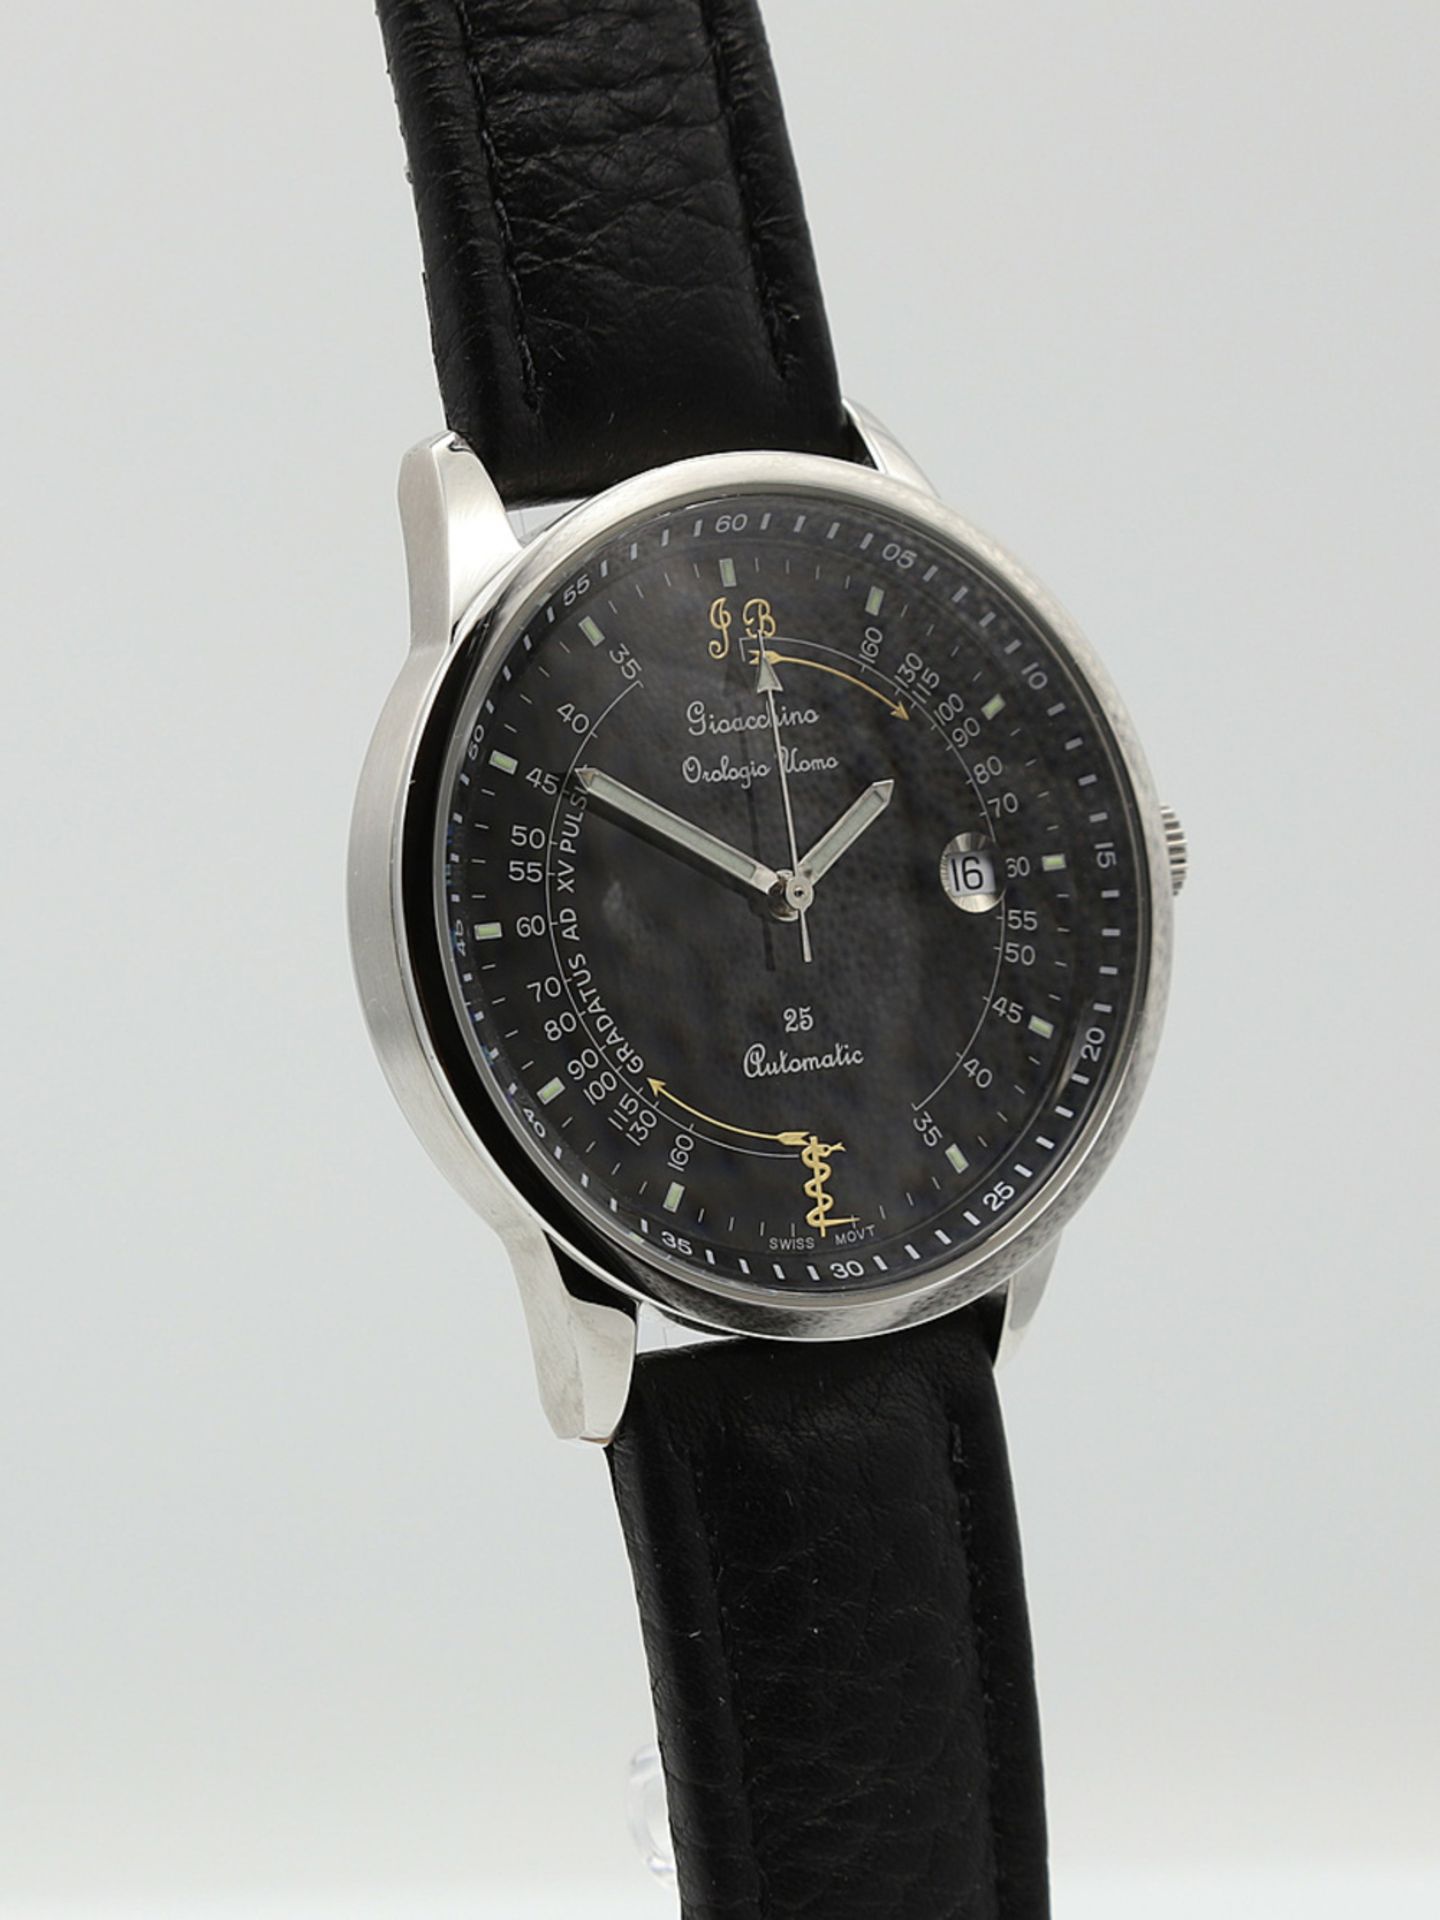 JB Gioacchino wristwatch JB3124 with pulse scale - Image 2 of 6